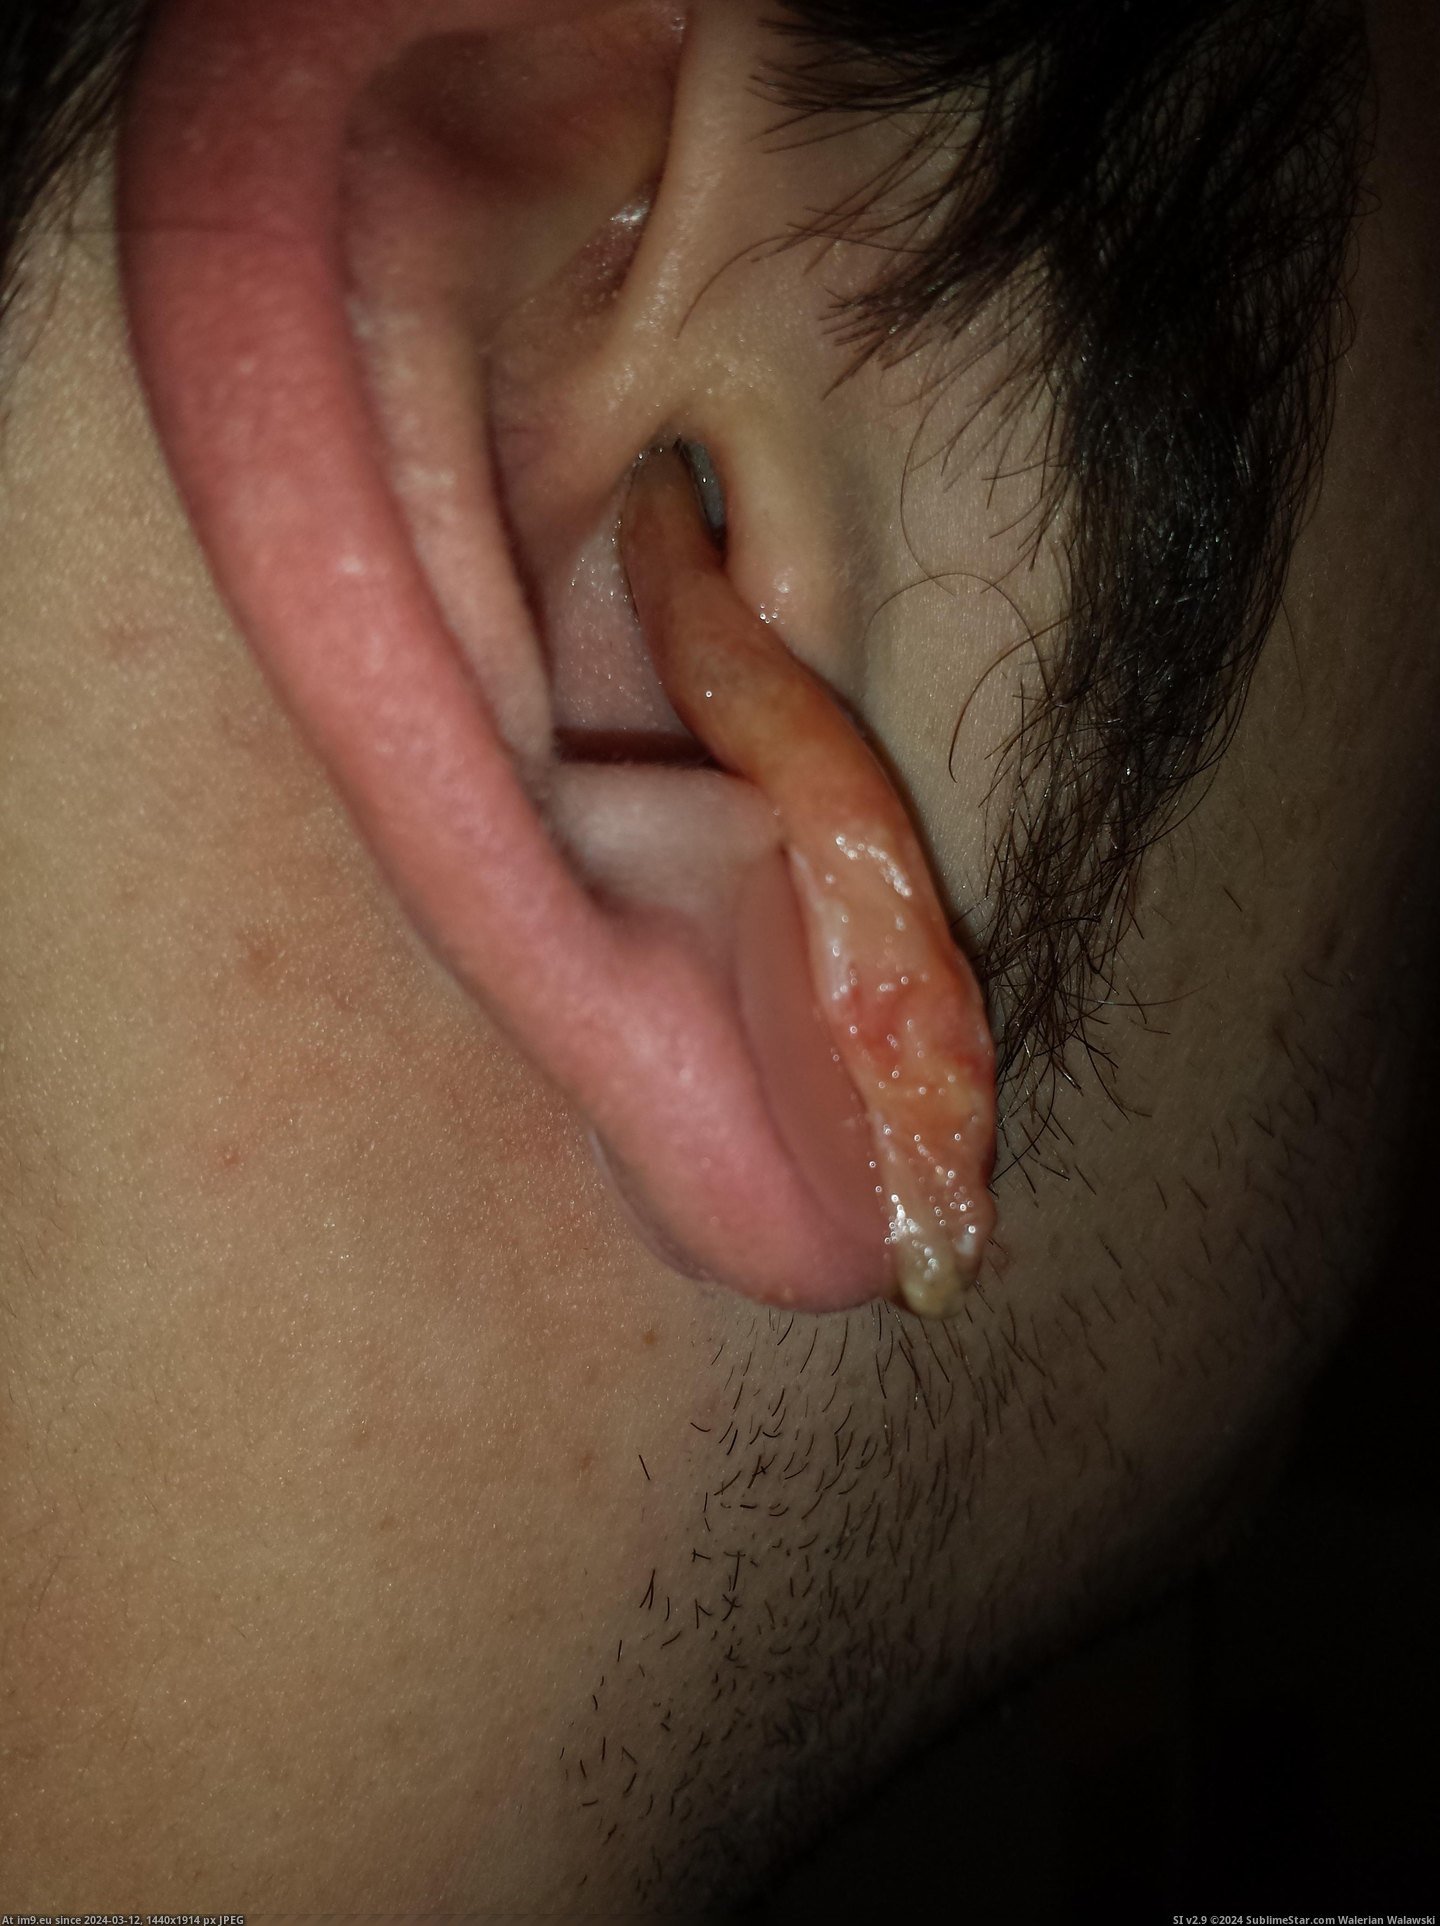 #Wtf #Ear #Infection #Crazy [Wtf] My crazy ear infection 2 Pic. (Obraz z album My r/WTF favs))